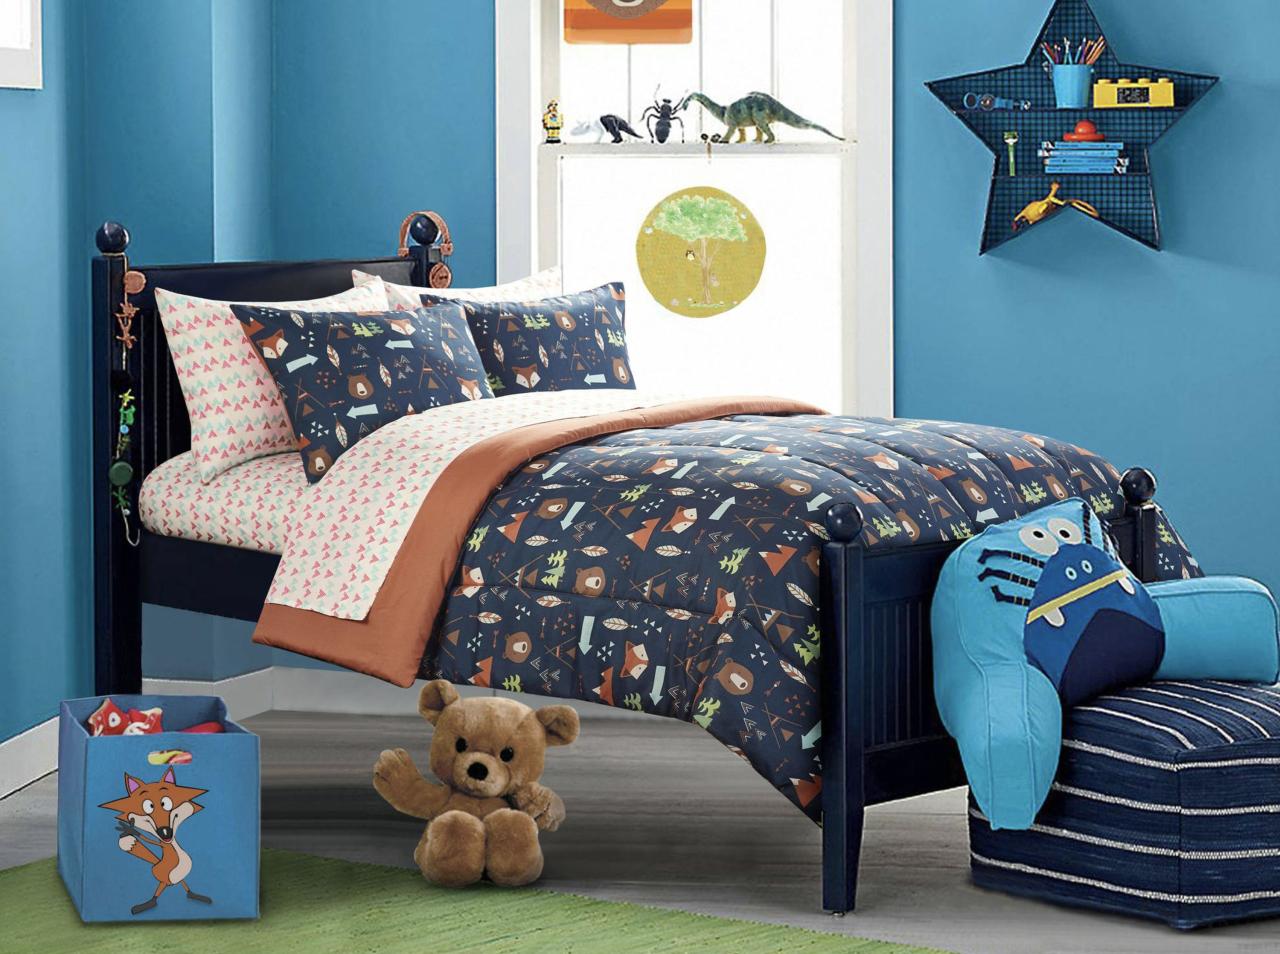 Woodland comforter beds safari comforters